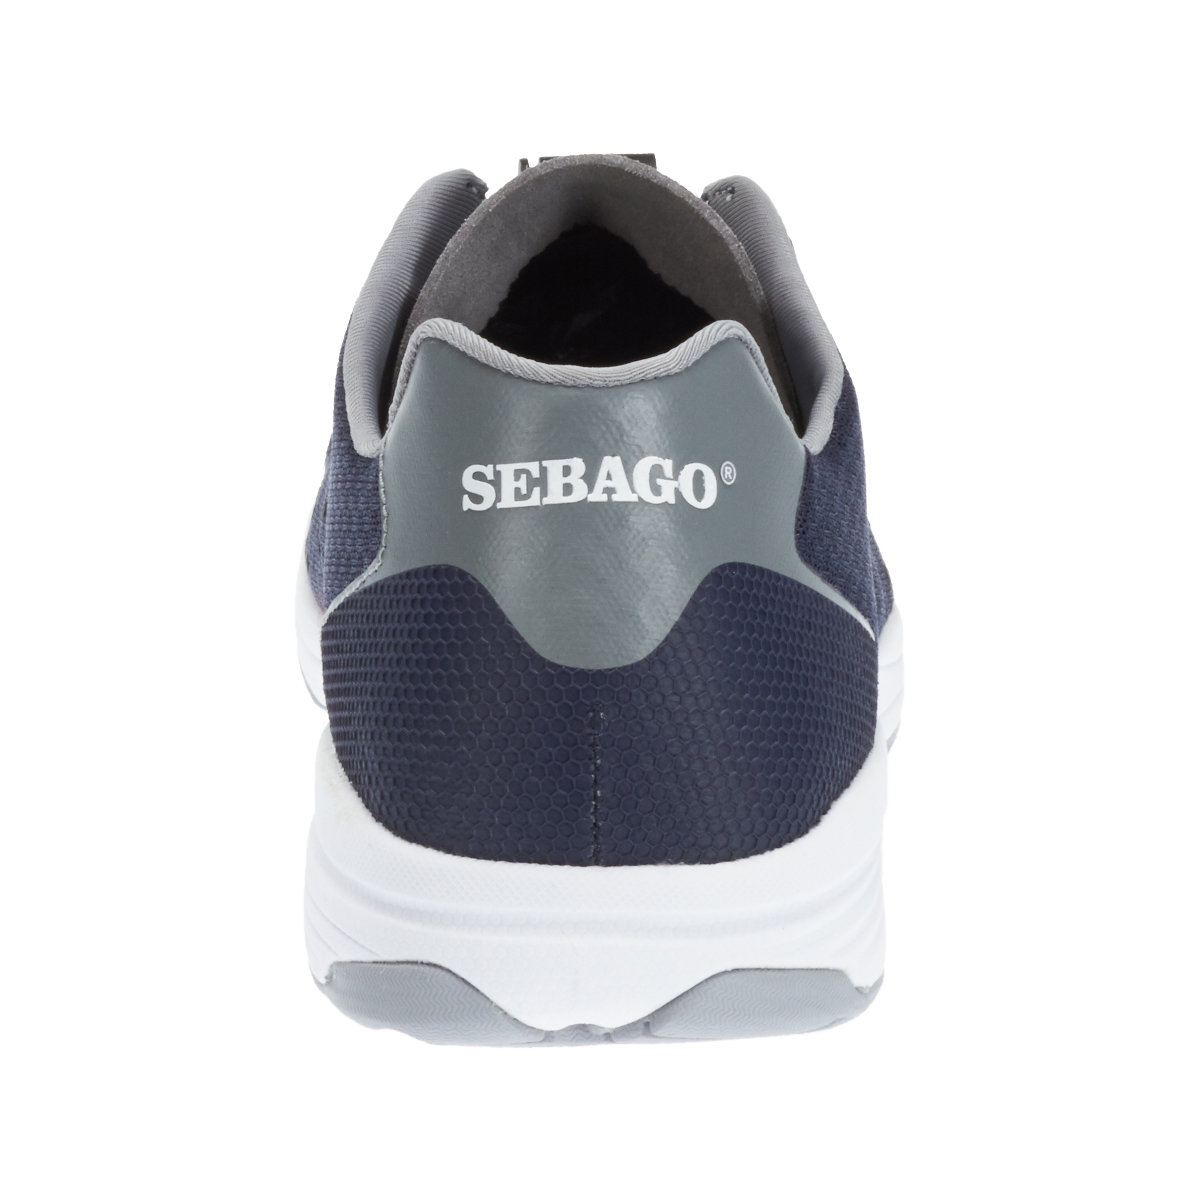 Sebago Cyphon Sea Sport chaussures à voile homme navy, taille EU 41,5 (US 8)